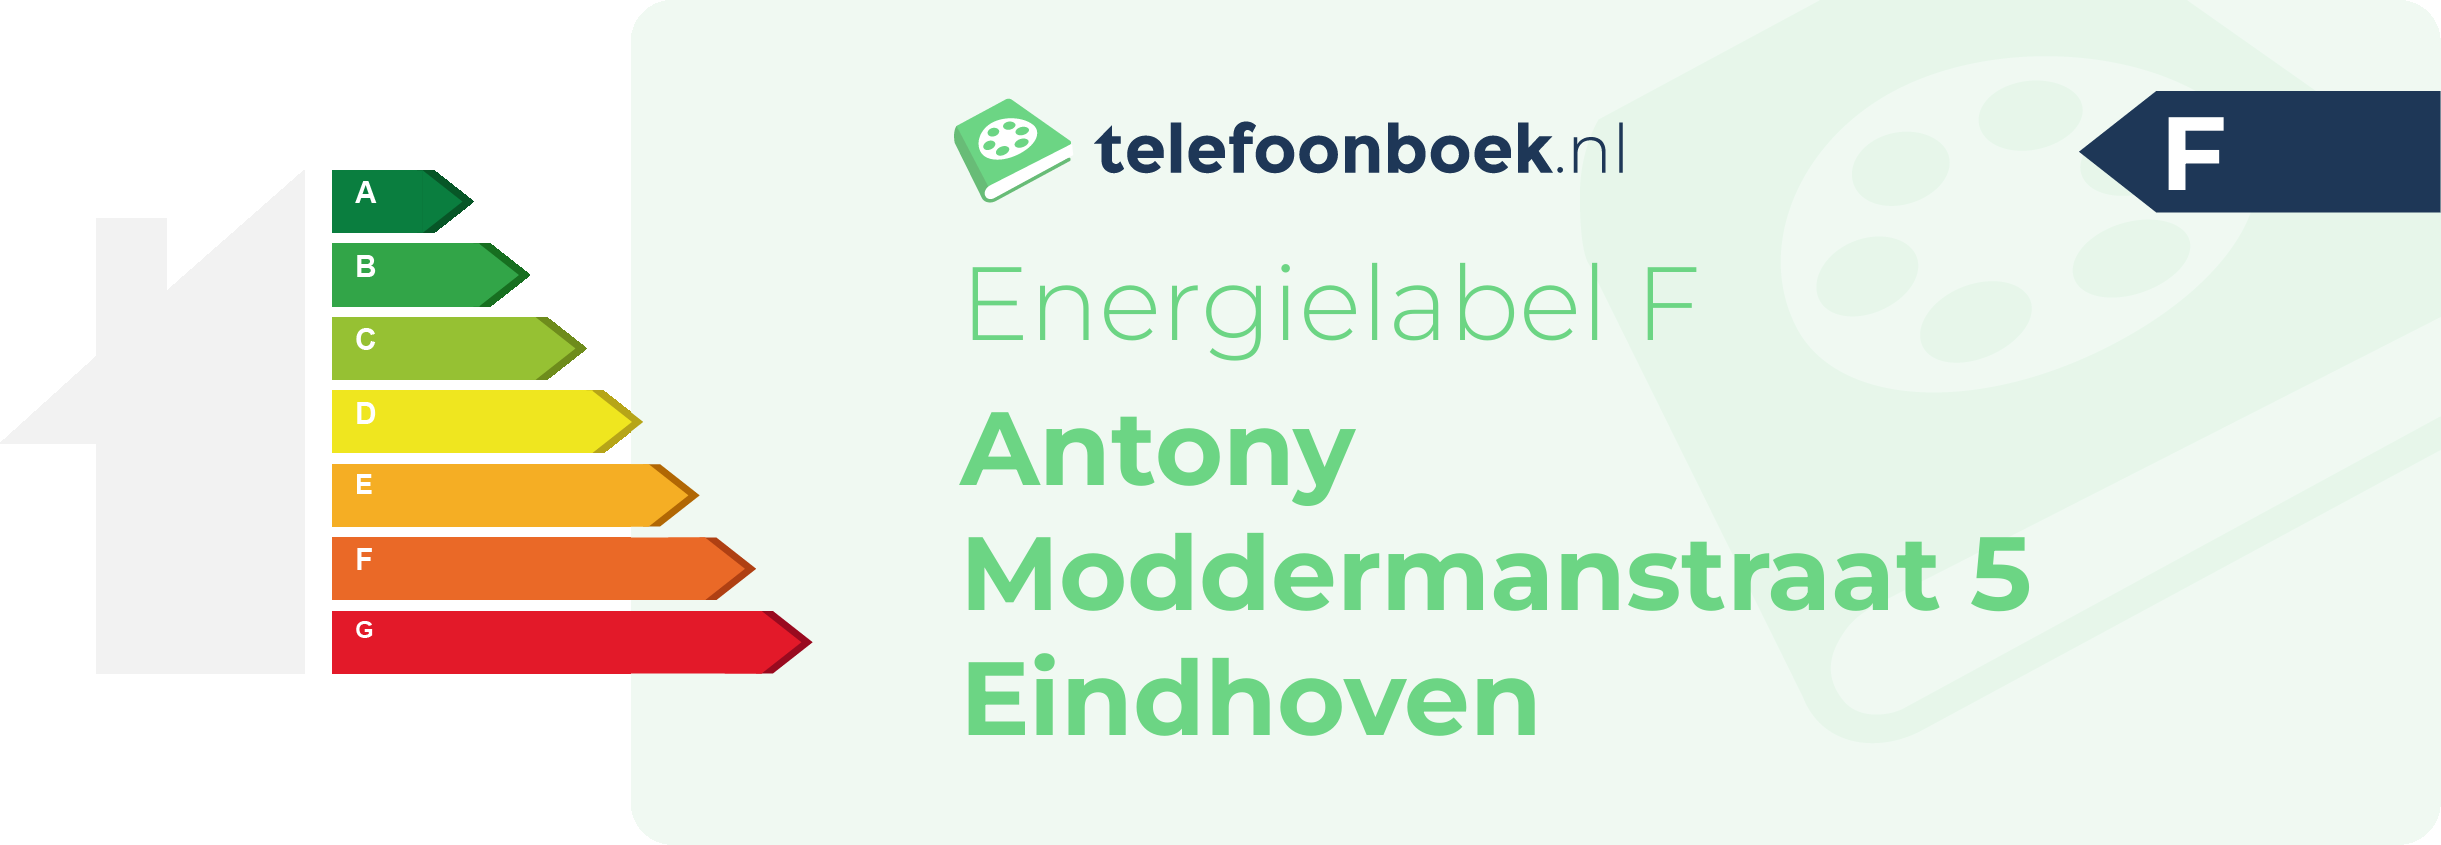 Energielabel Antony Moddermanstraat 5 Eindhoven